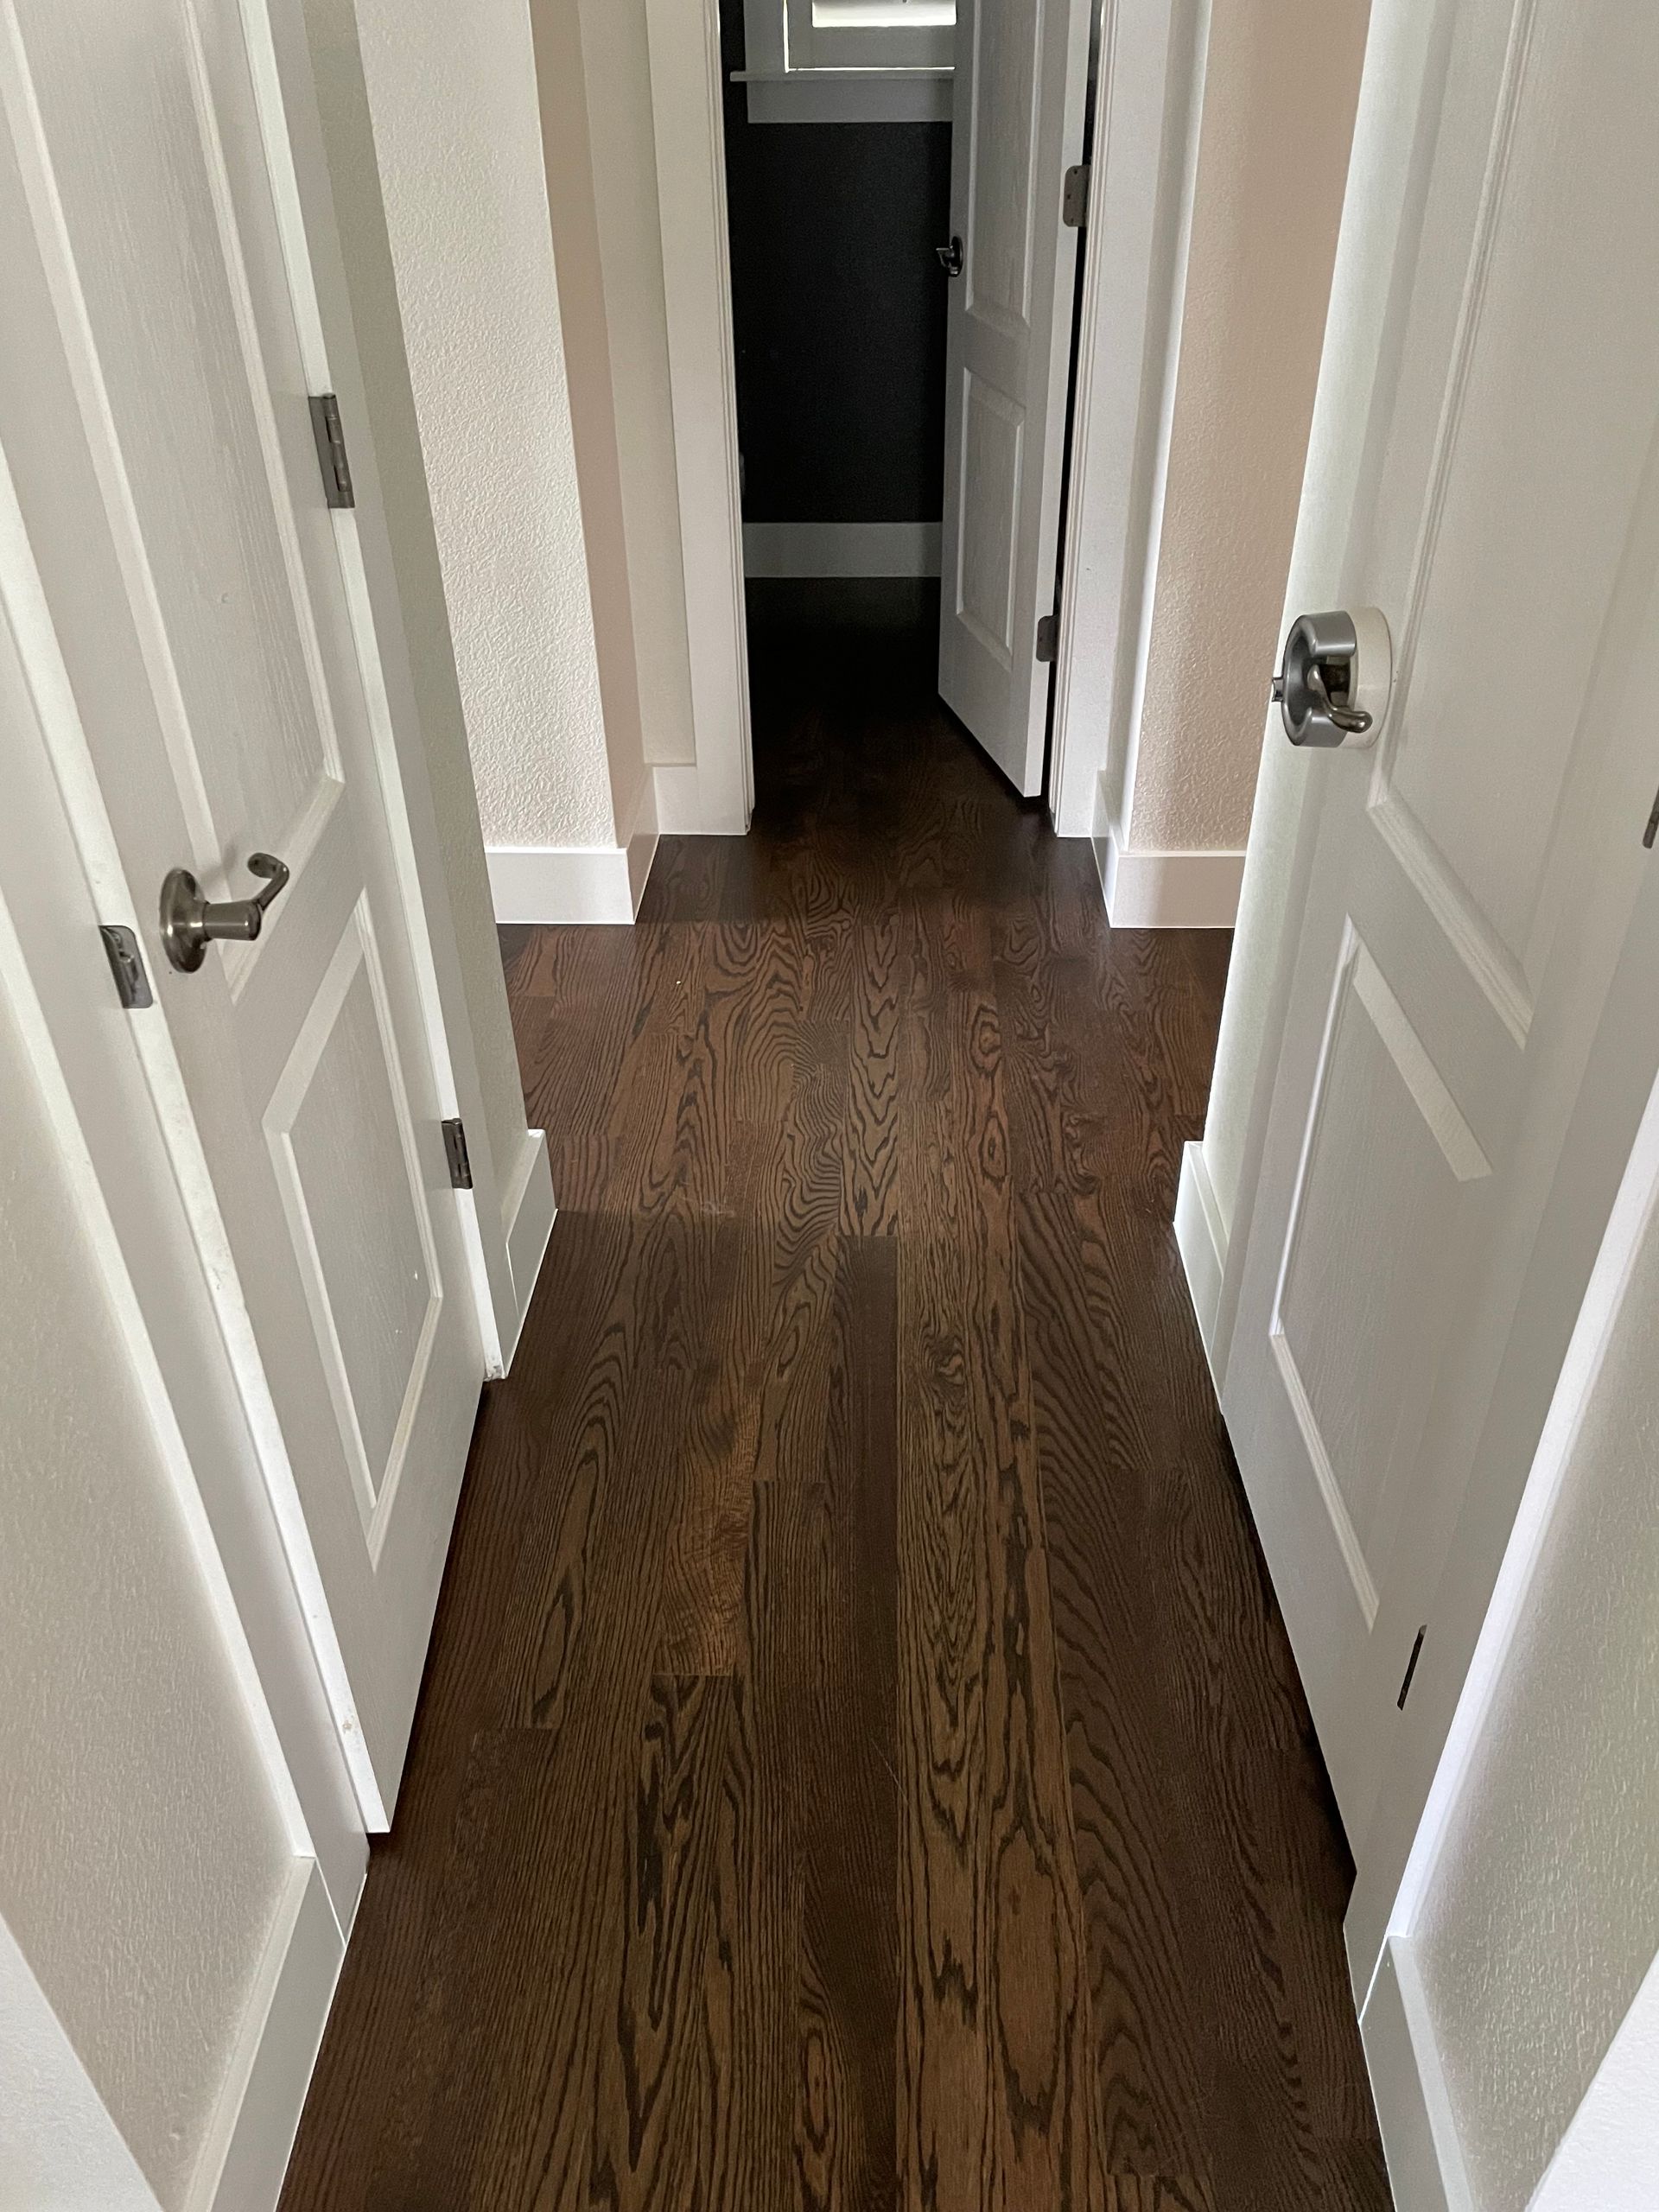 hallway with wooden floors